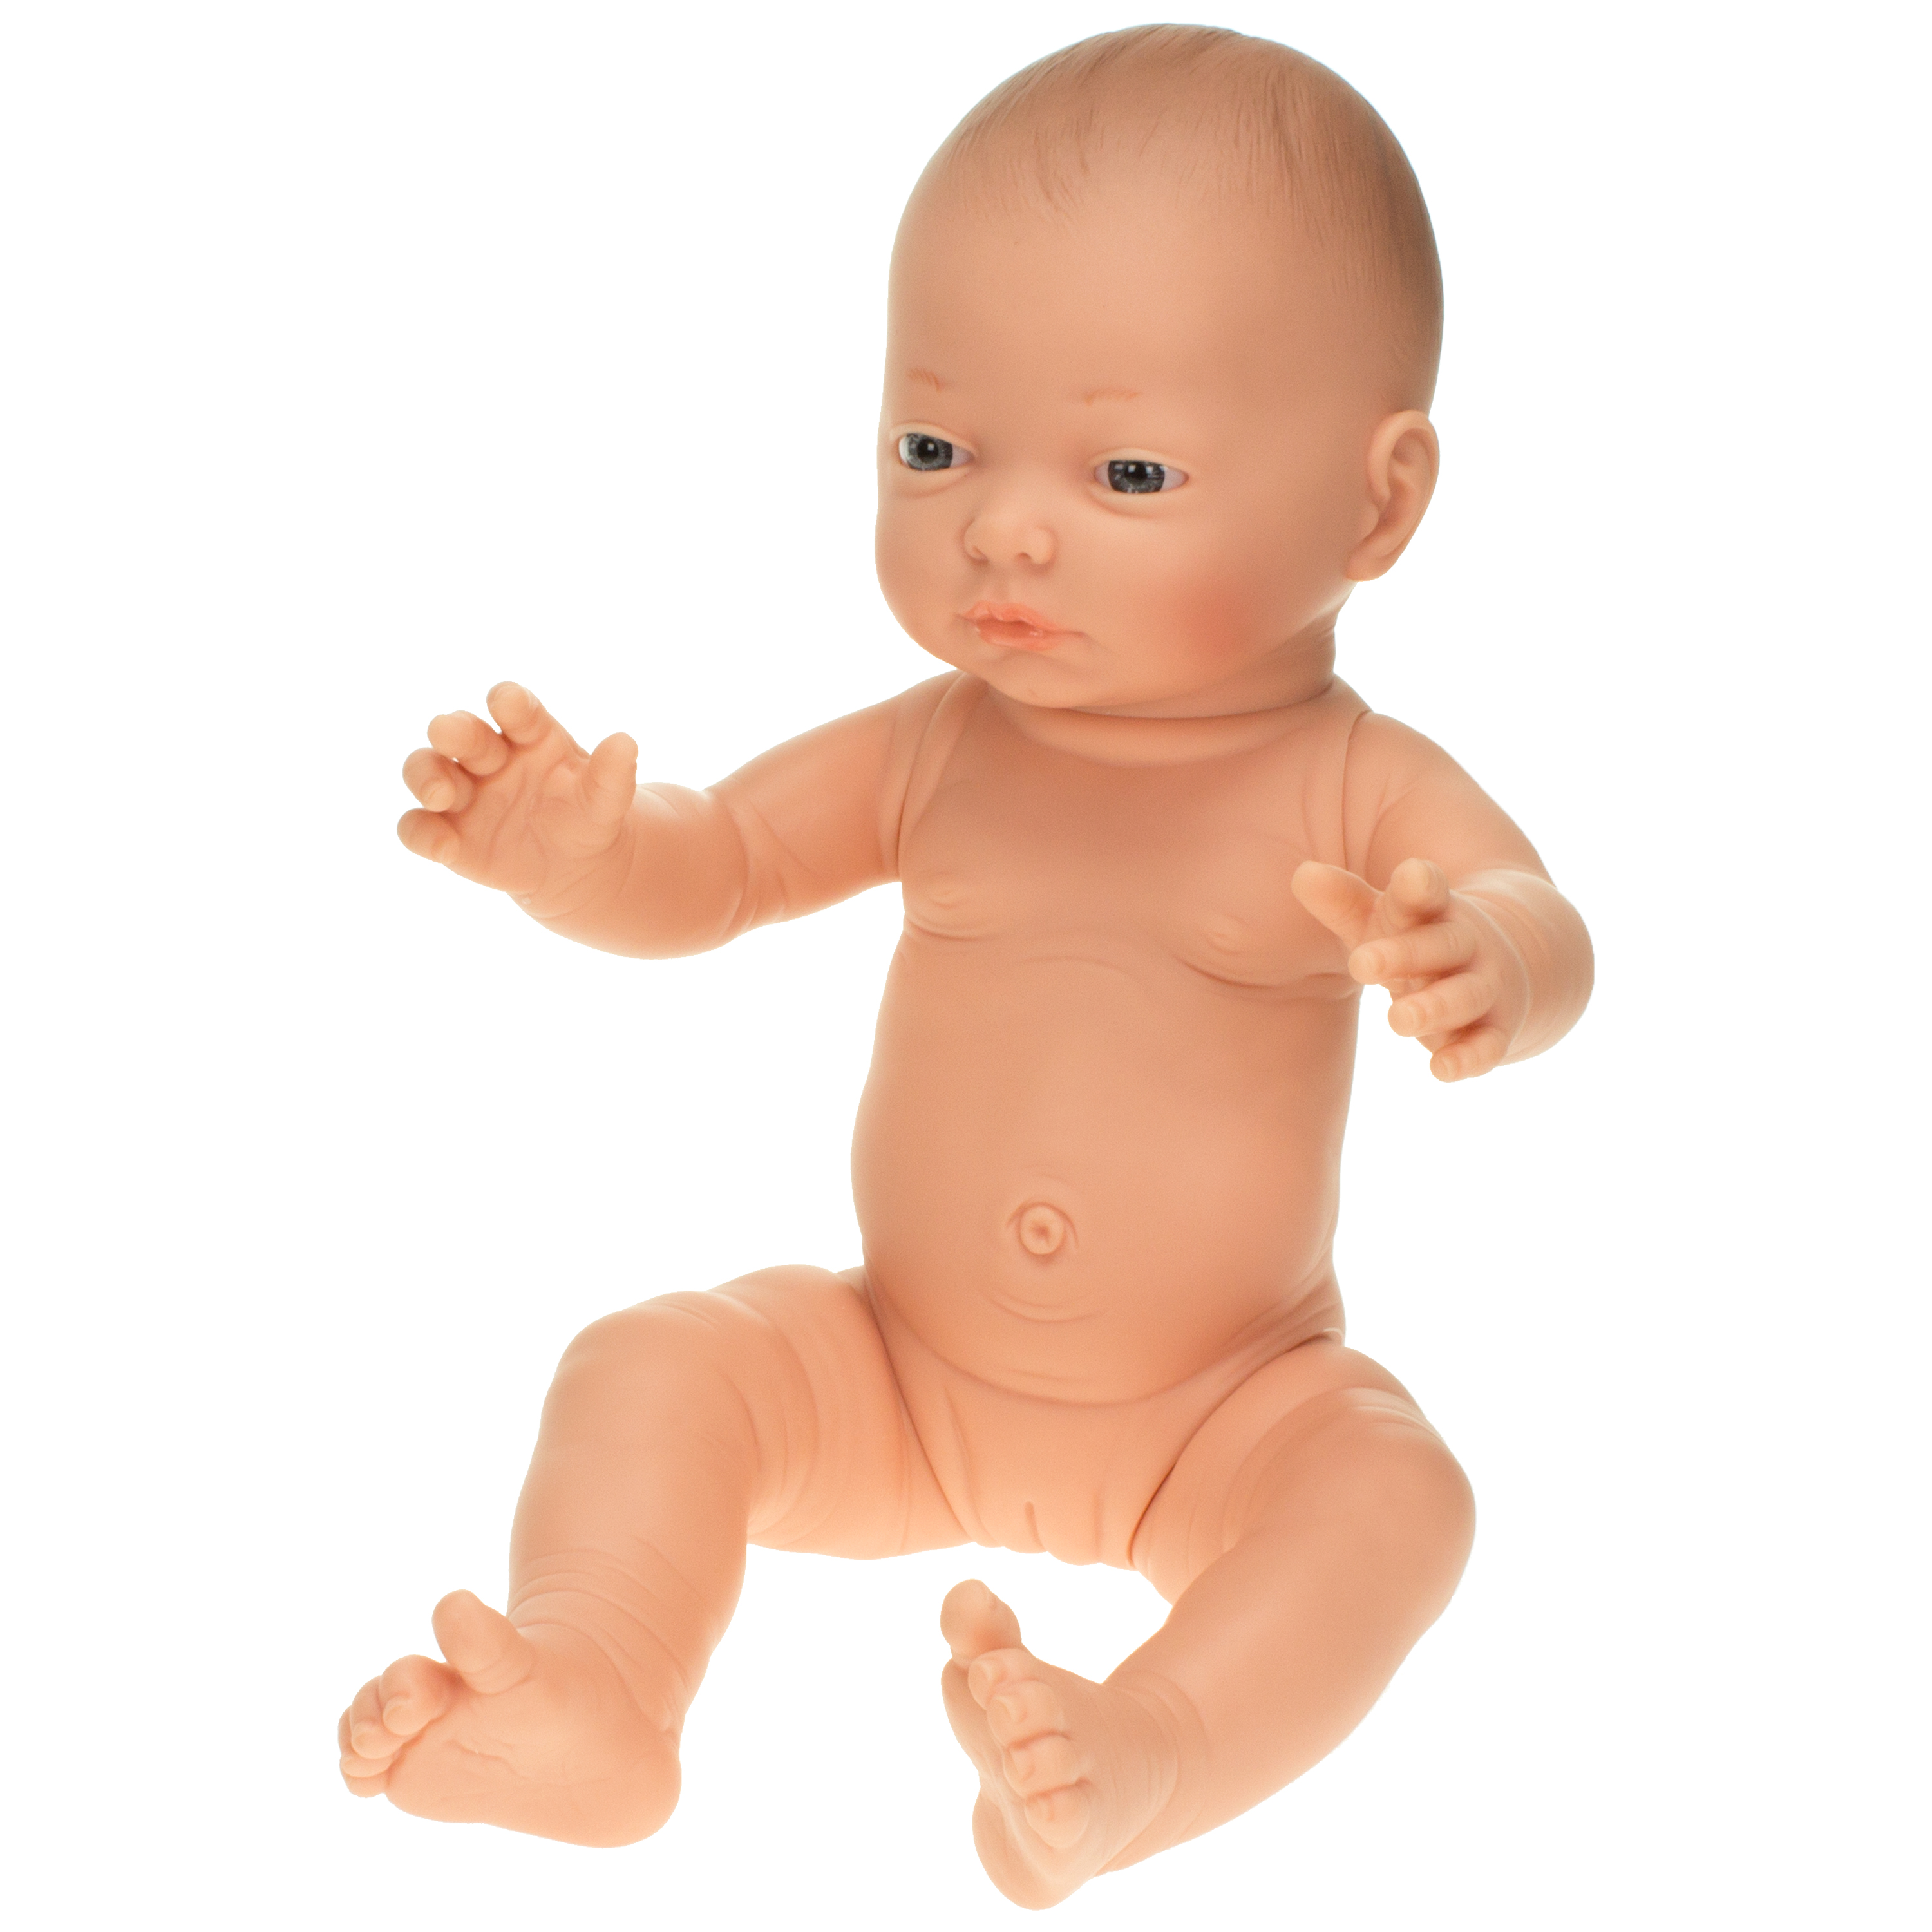 Babypuppe Mädchen 'europäisch', 42 cm